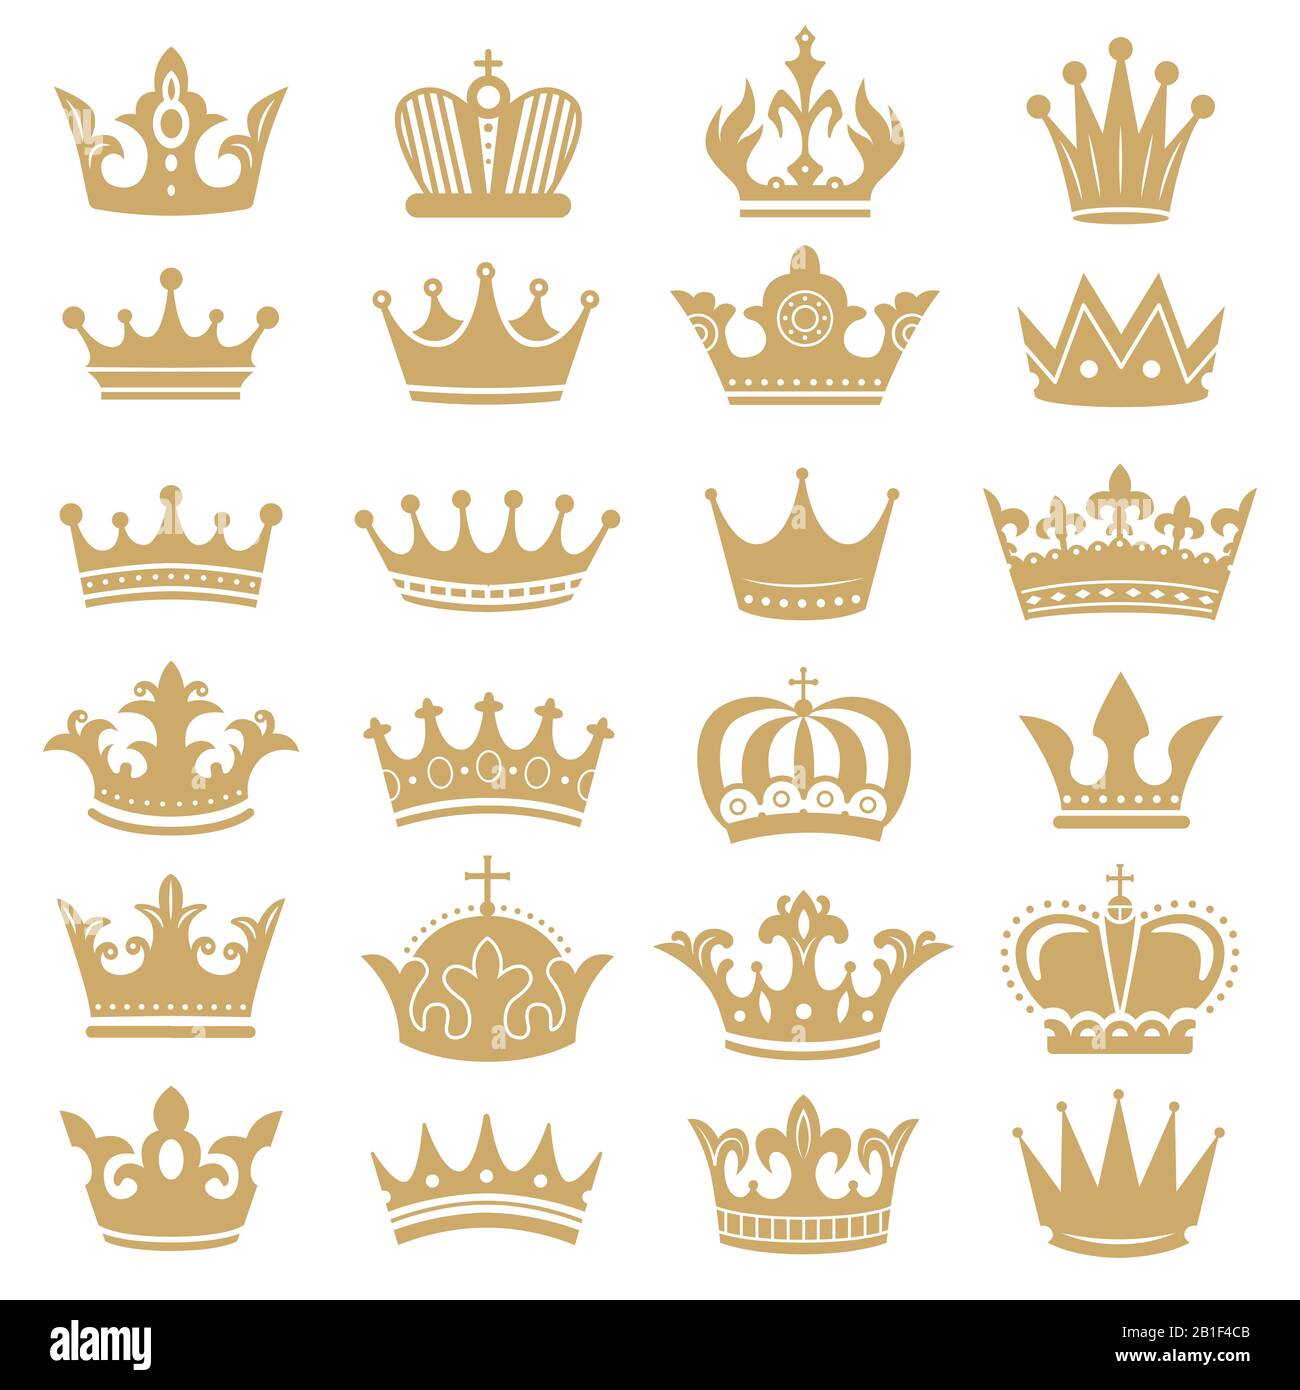 Goldene Krone Silhouette. Königskronen, Krönungskönig und luxuriöse Tiara-Silhouetten Ikonen Vektor-Set Stock Vektor